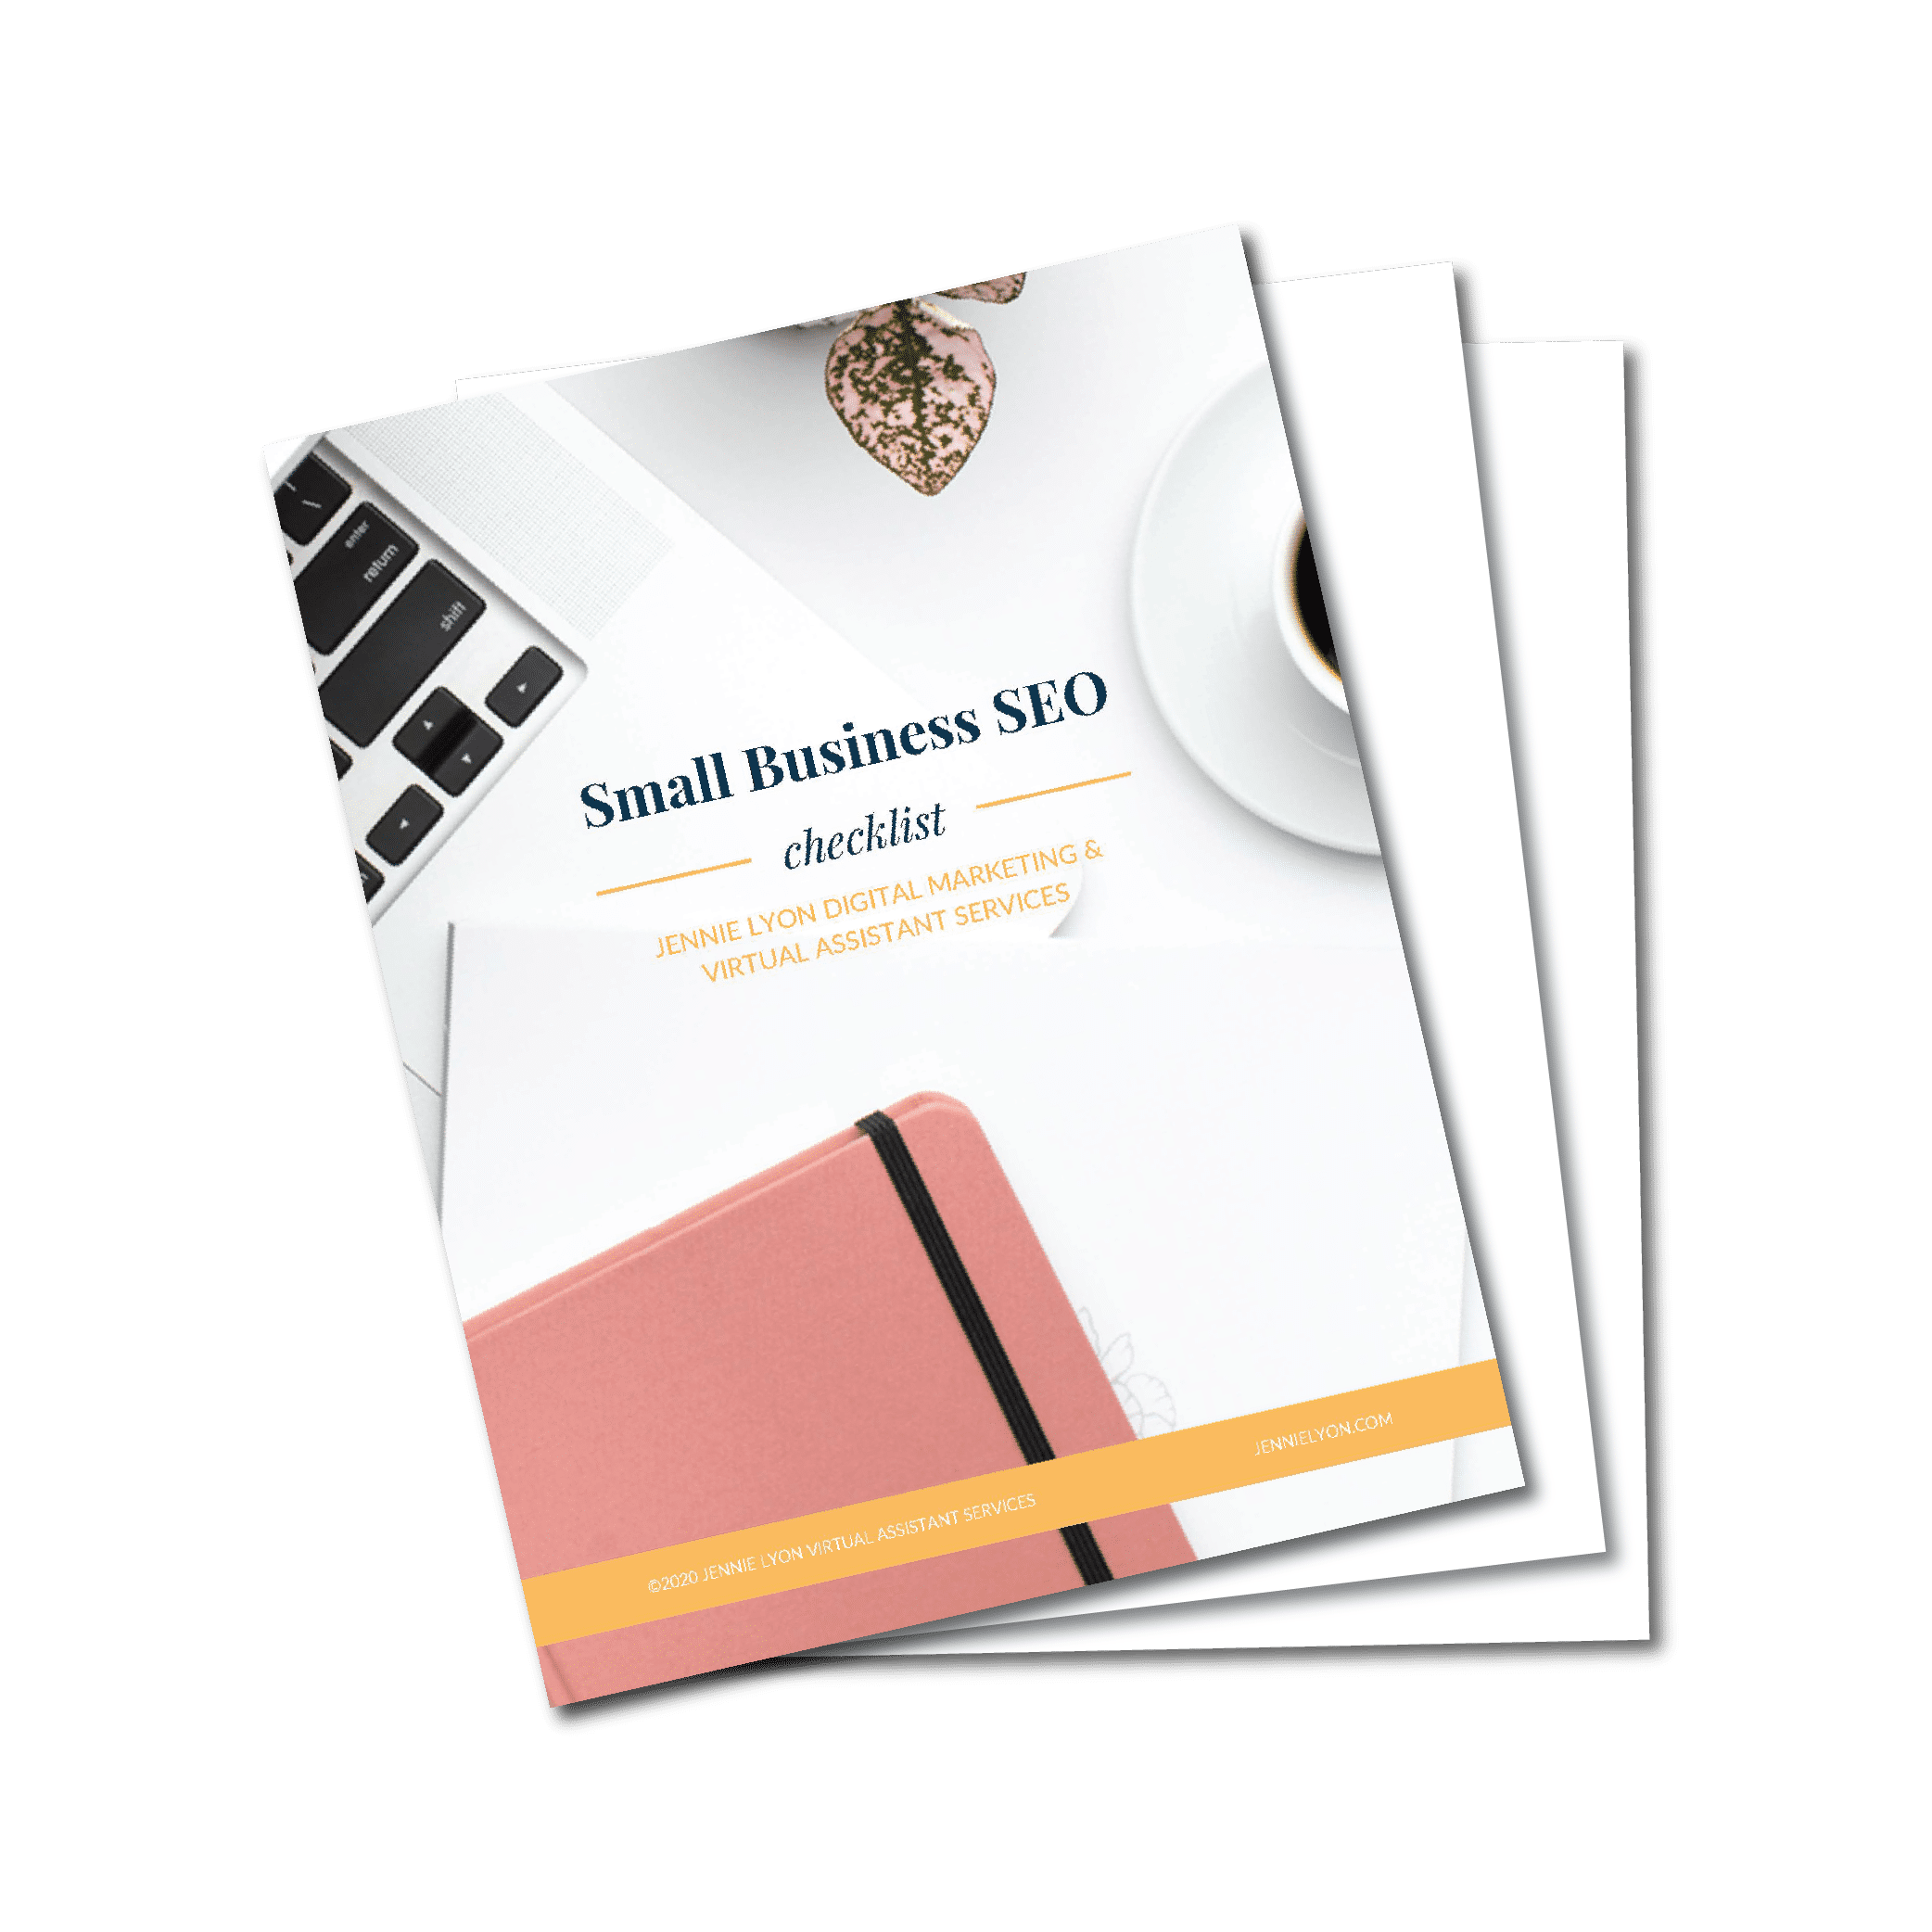 Small Business SEO Workbook